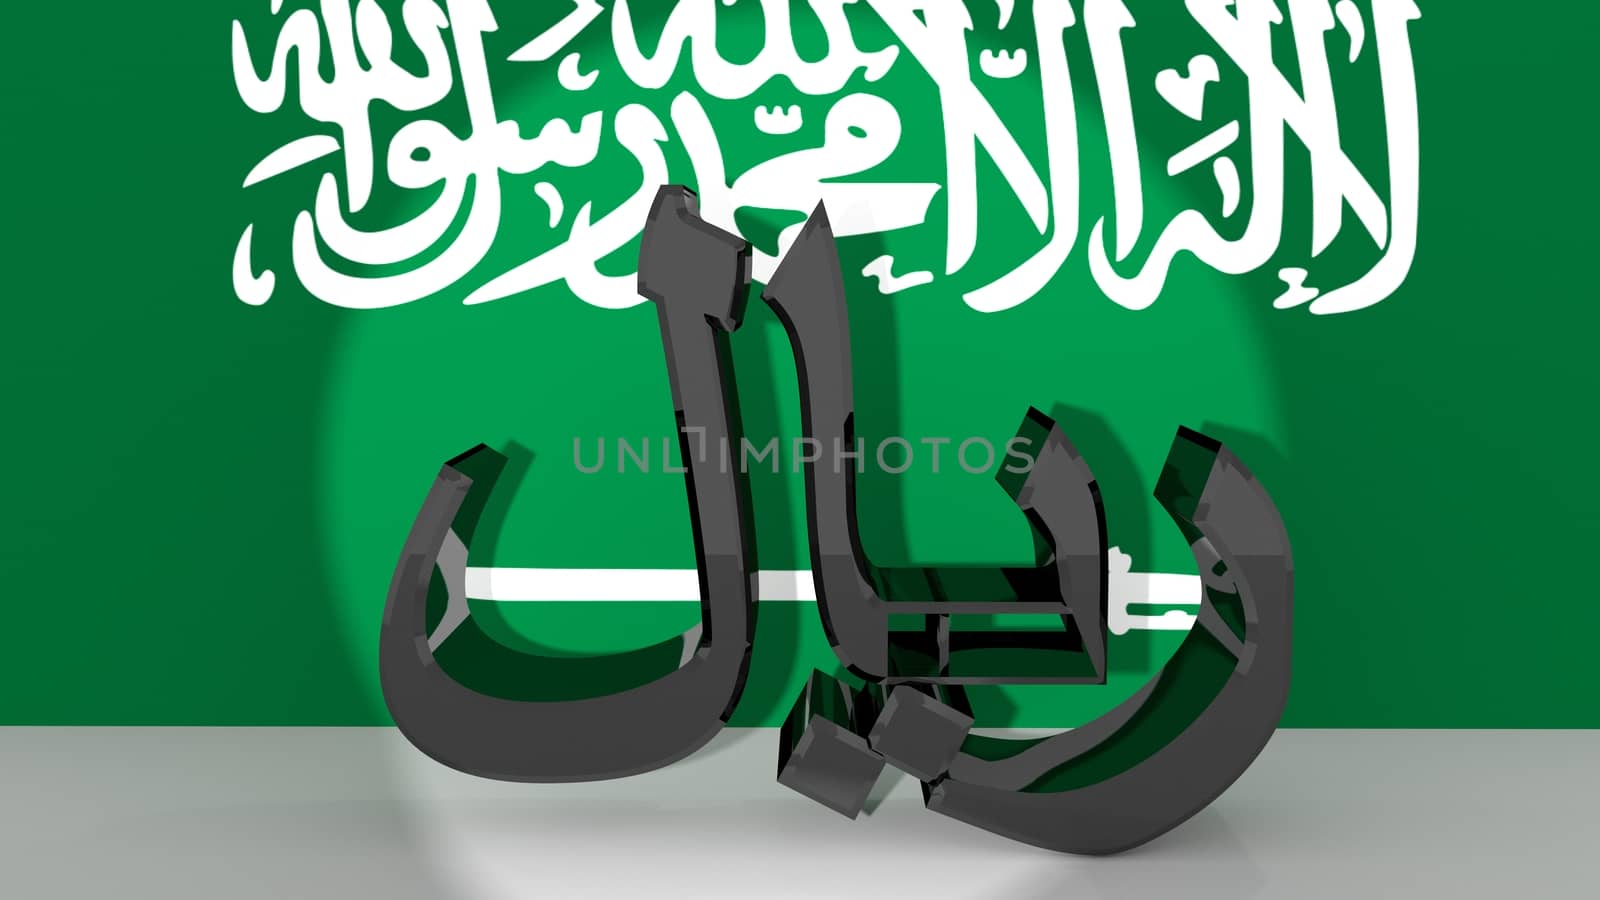 Saudi riyal Symbol in Spotlight by MarkDw